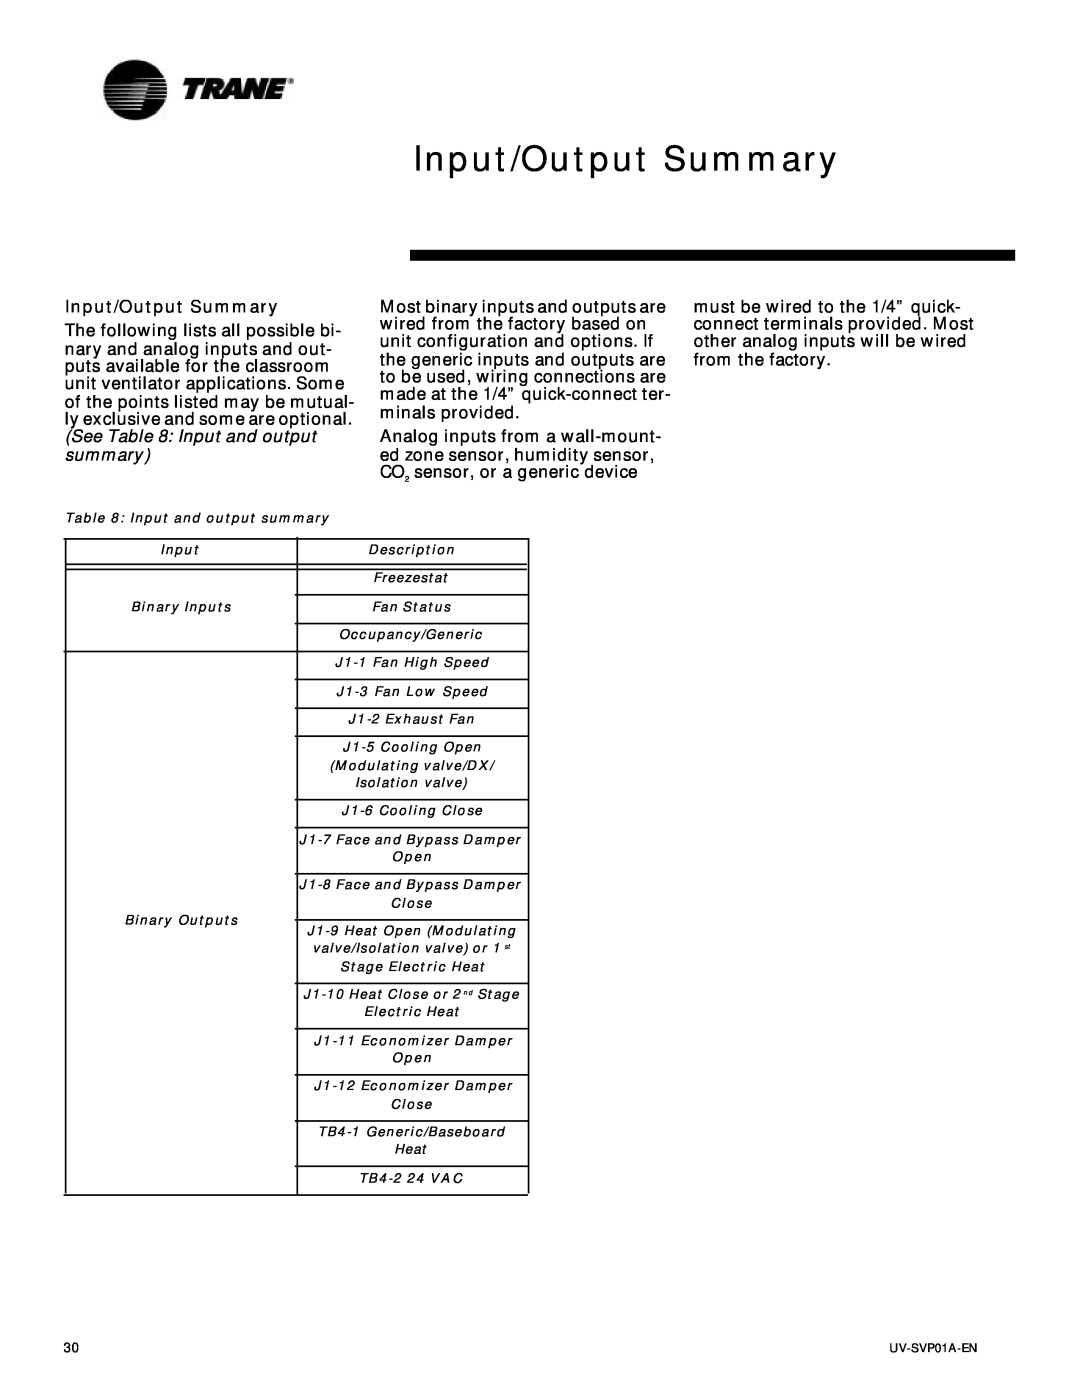 Trane Tracer Unit Ventilator, ZN.520 manual Input/Output Summary, summary 